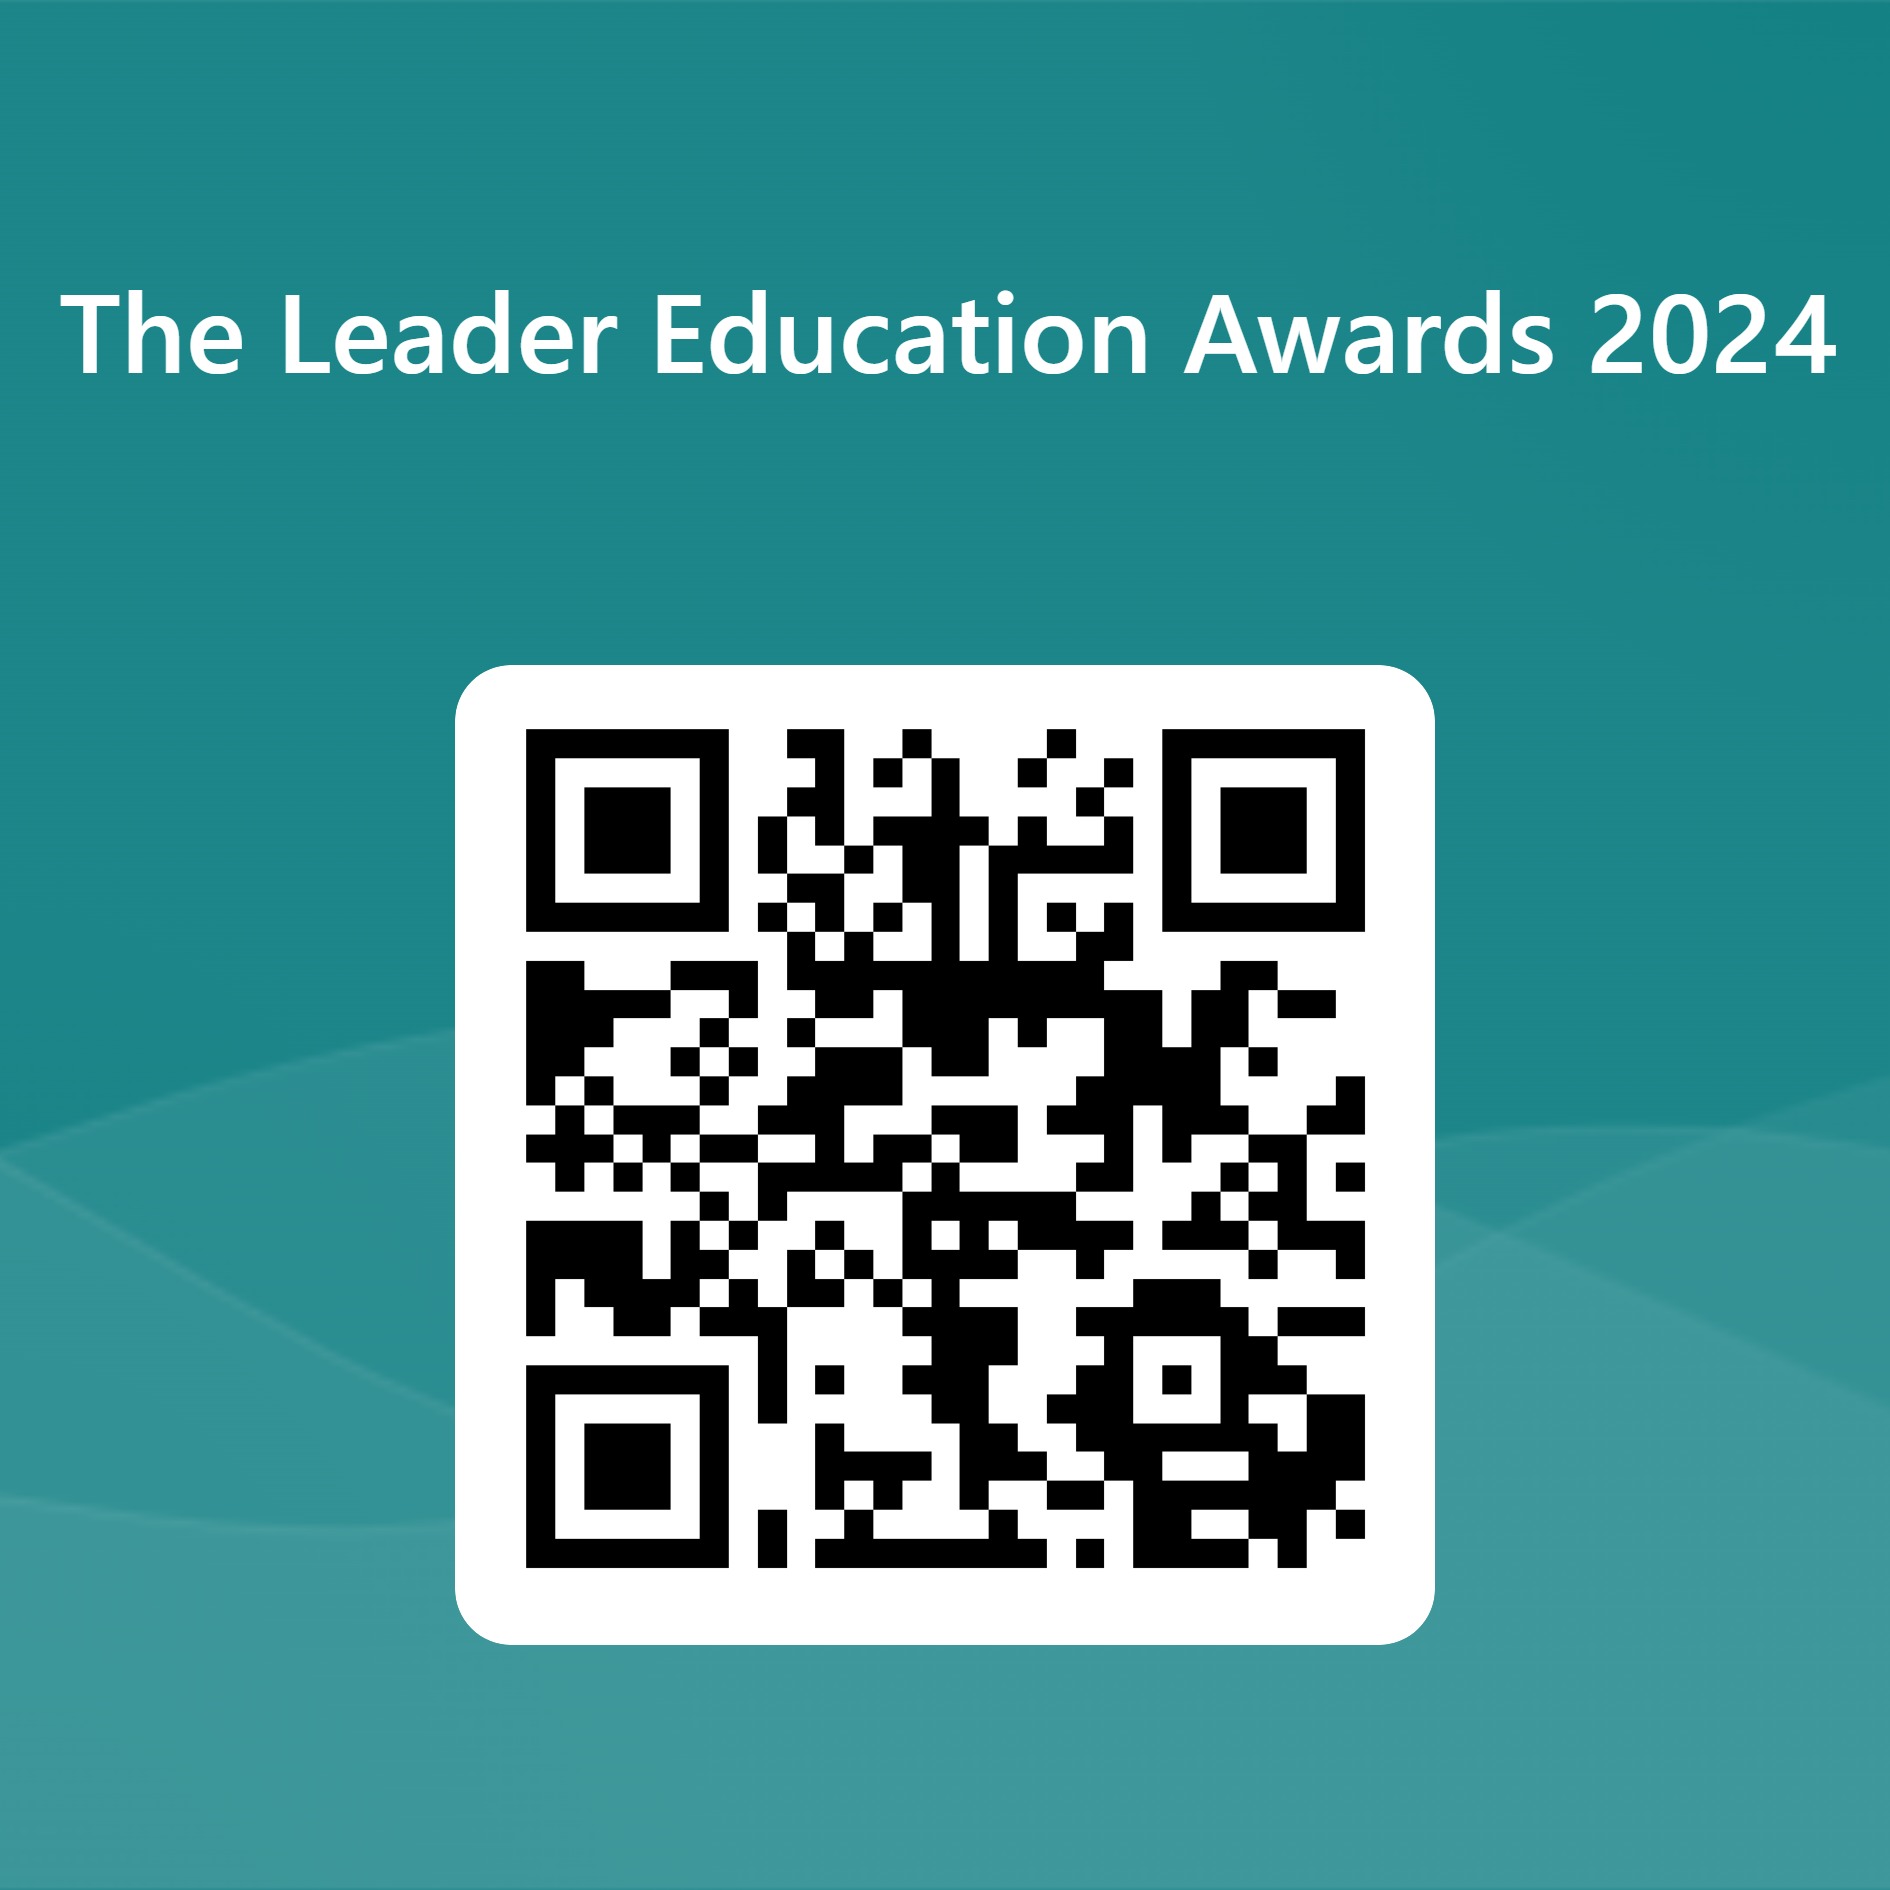 Enter the Leader Education Awards 2024.